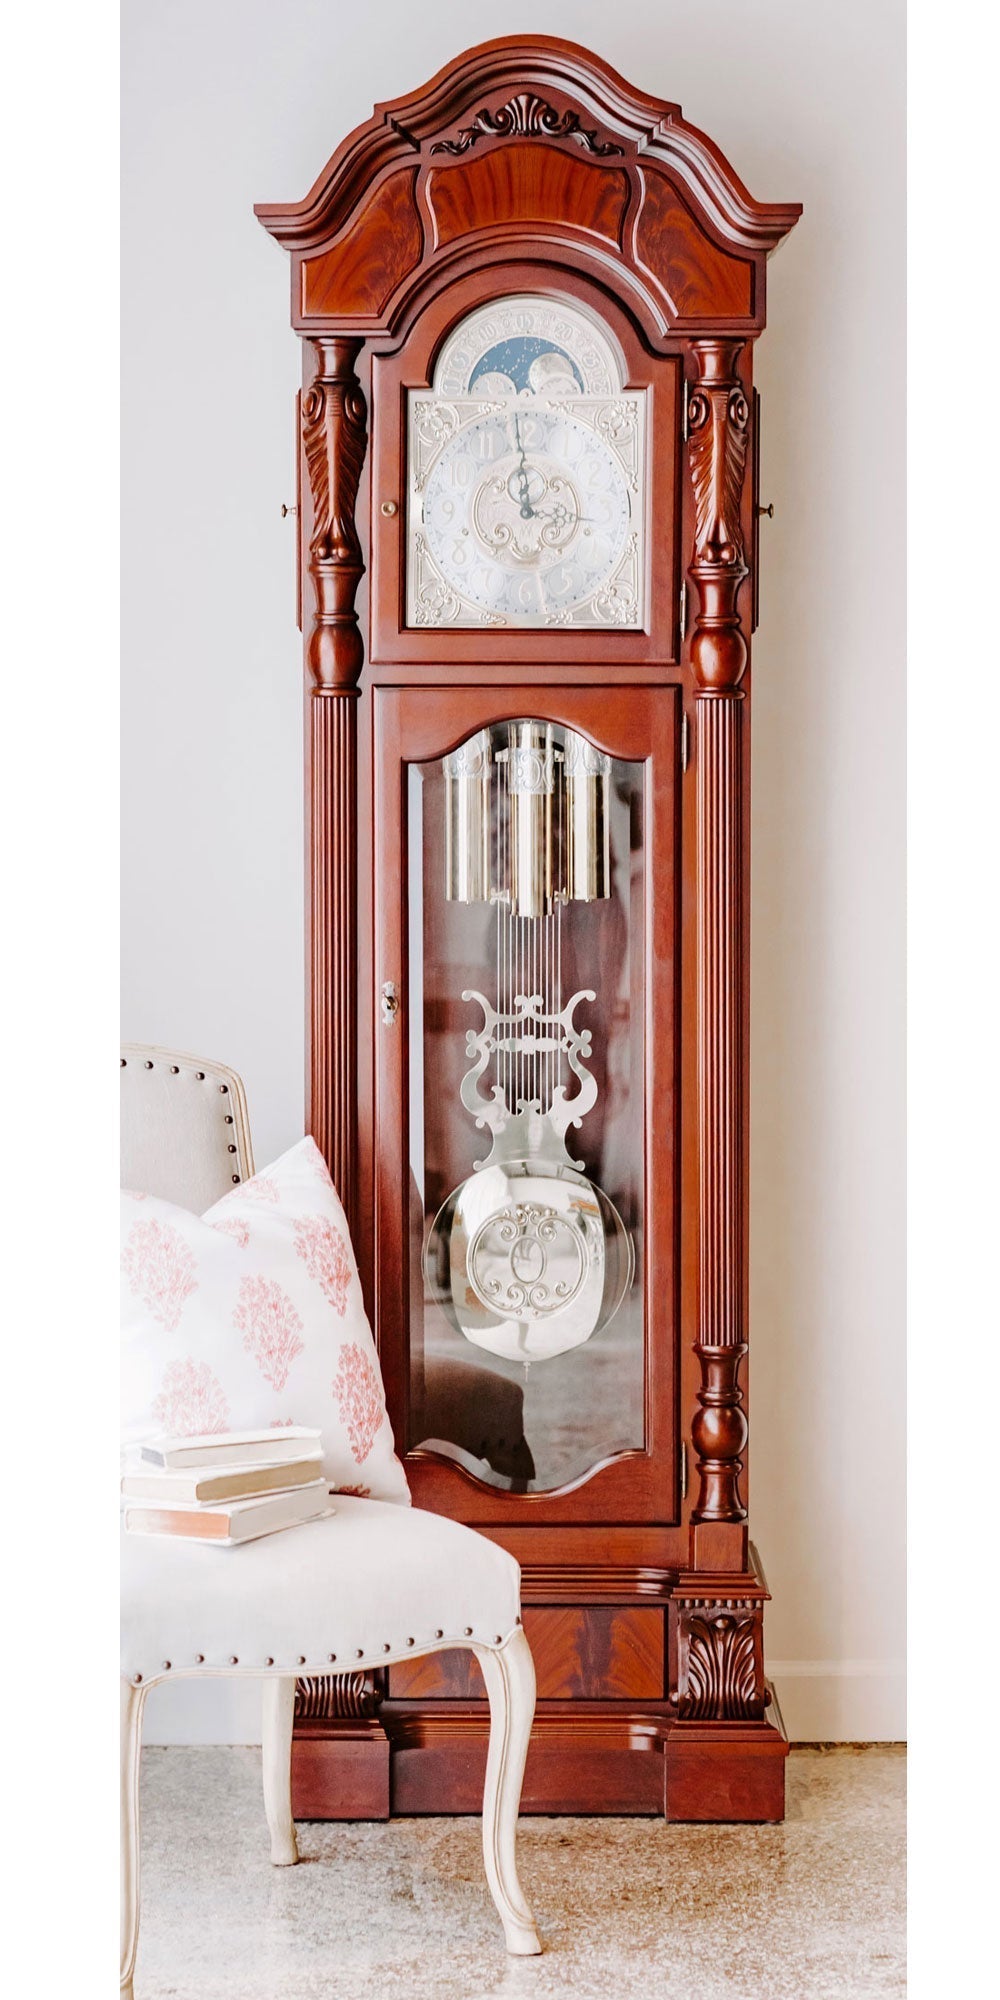 Anstead Tubular Chimes Grandfather Clock by Hermle Clocks